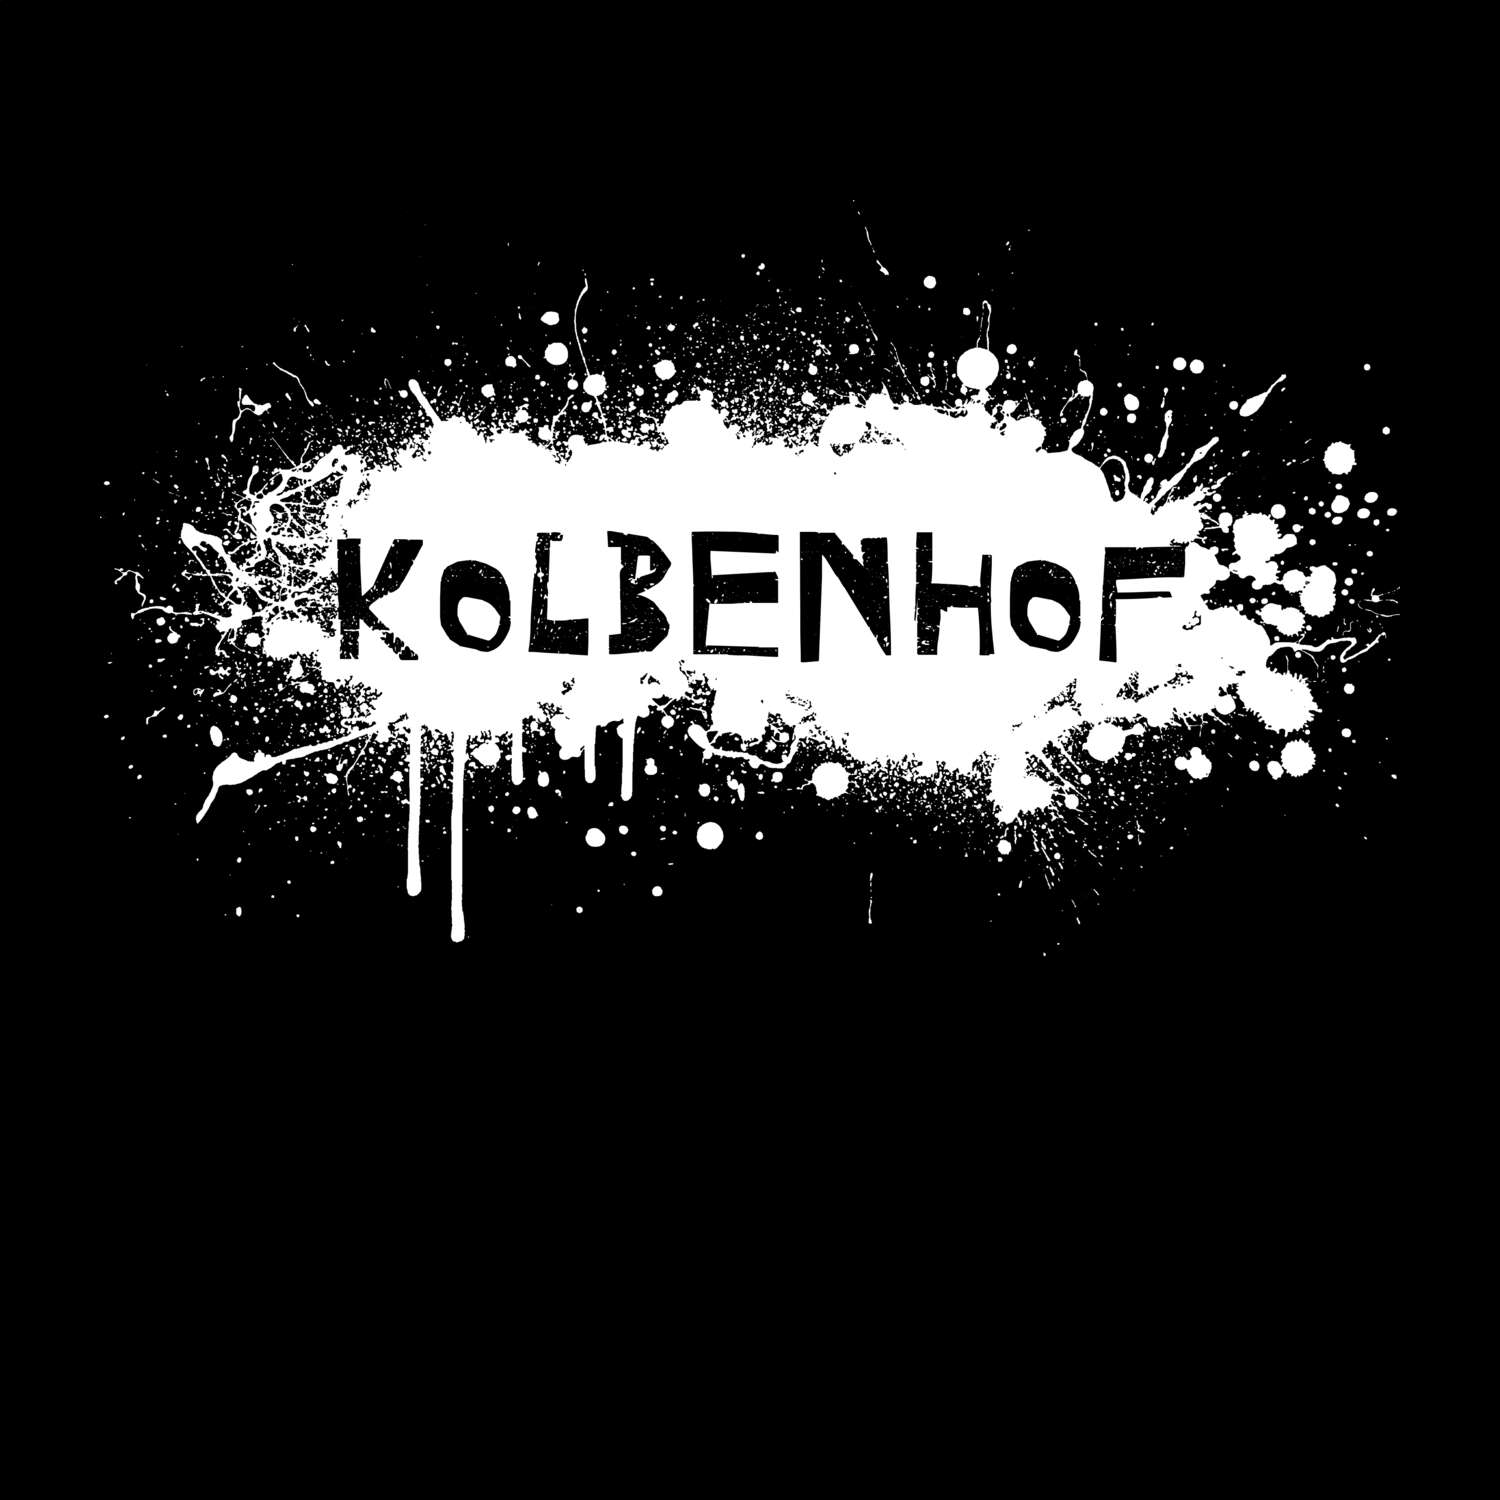 Kolbenhof T-Shirt »Paint Splash Punk«